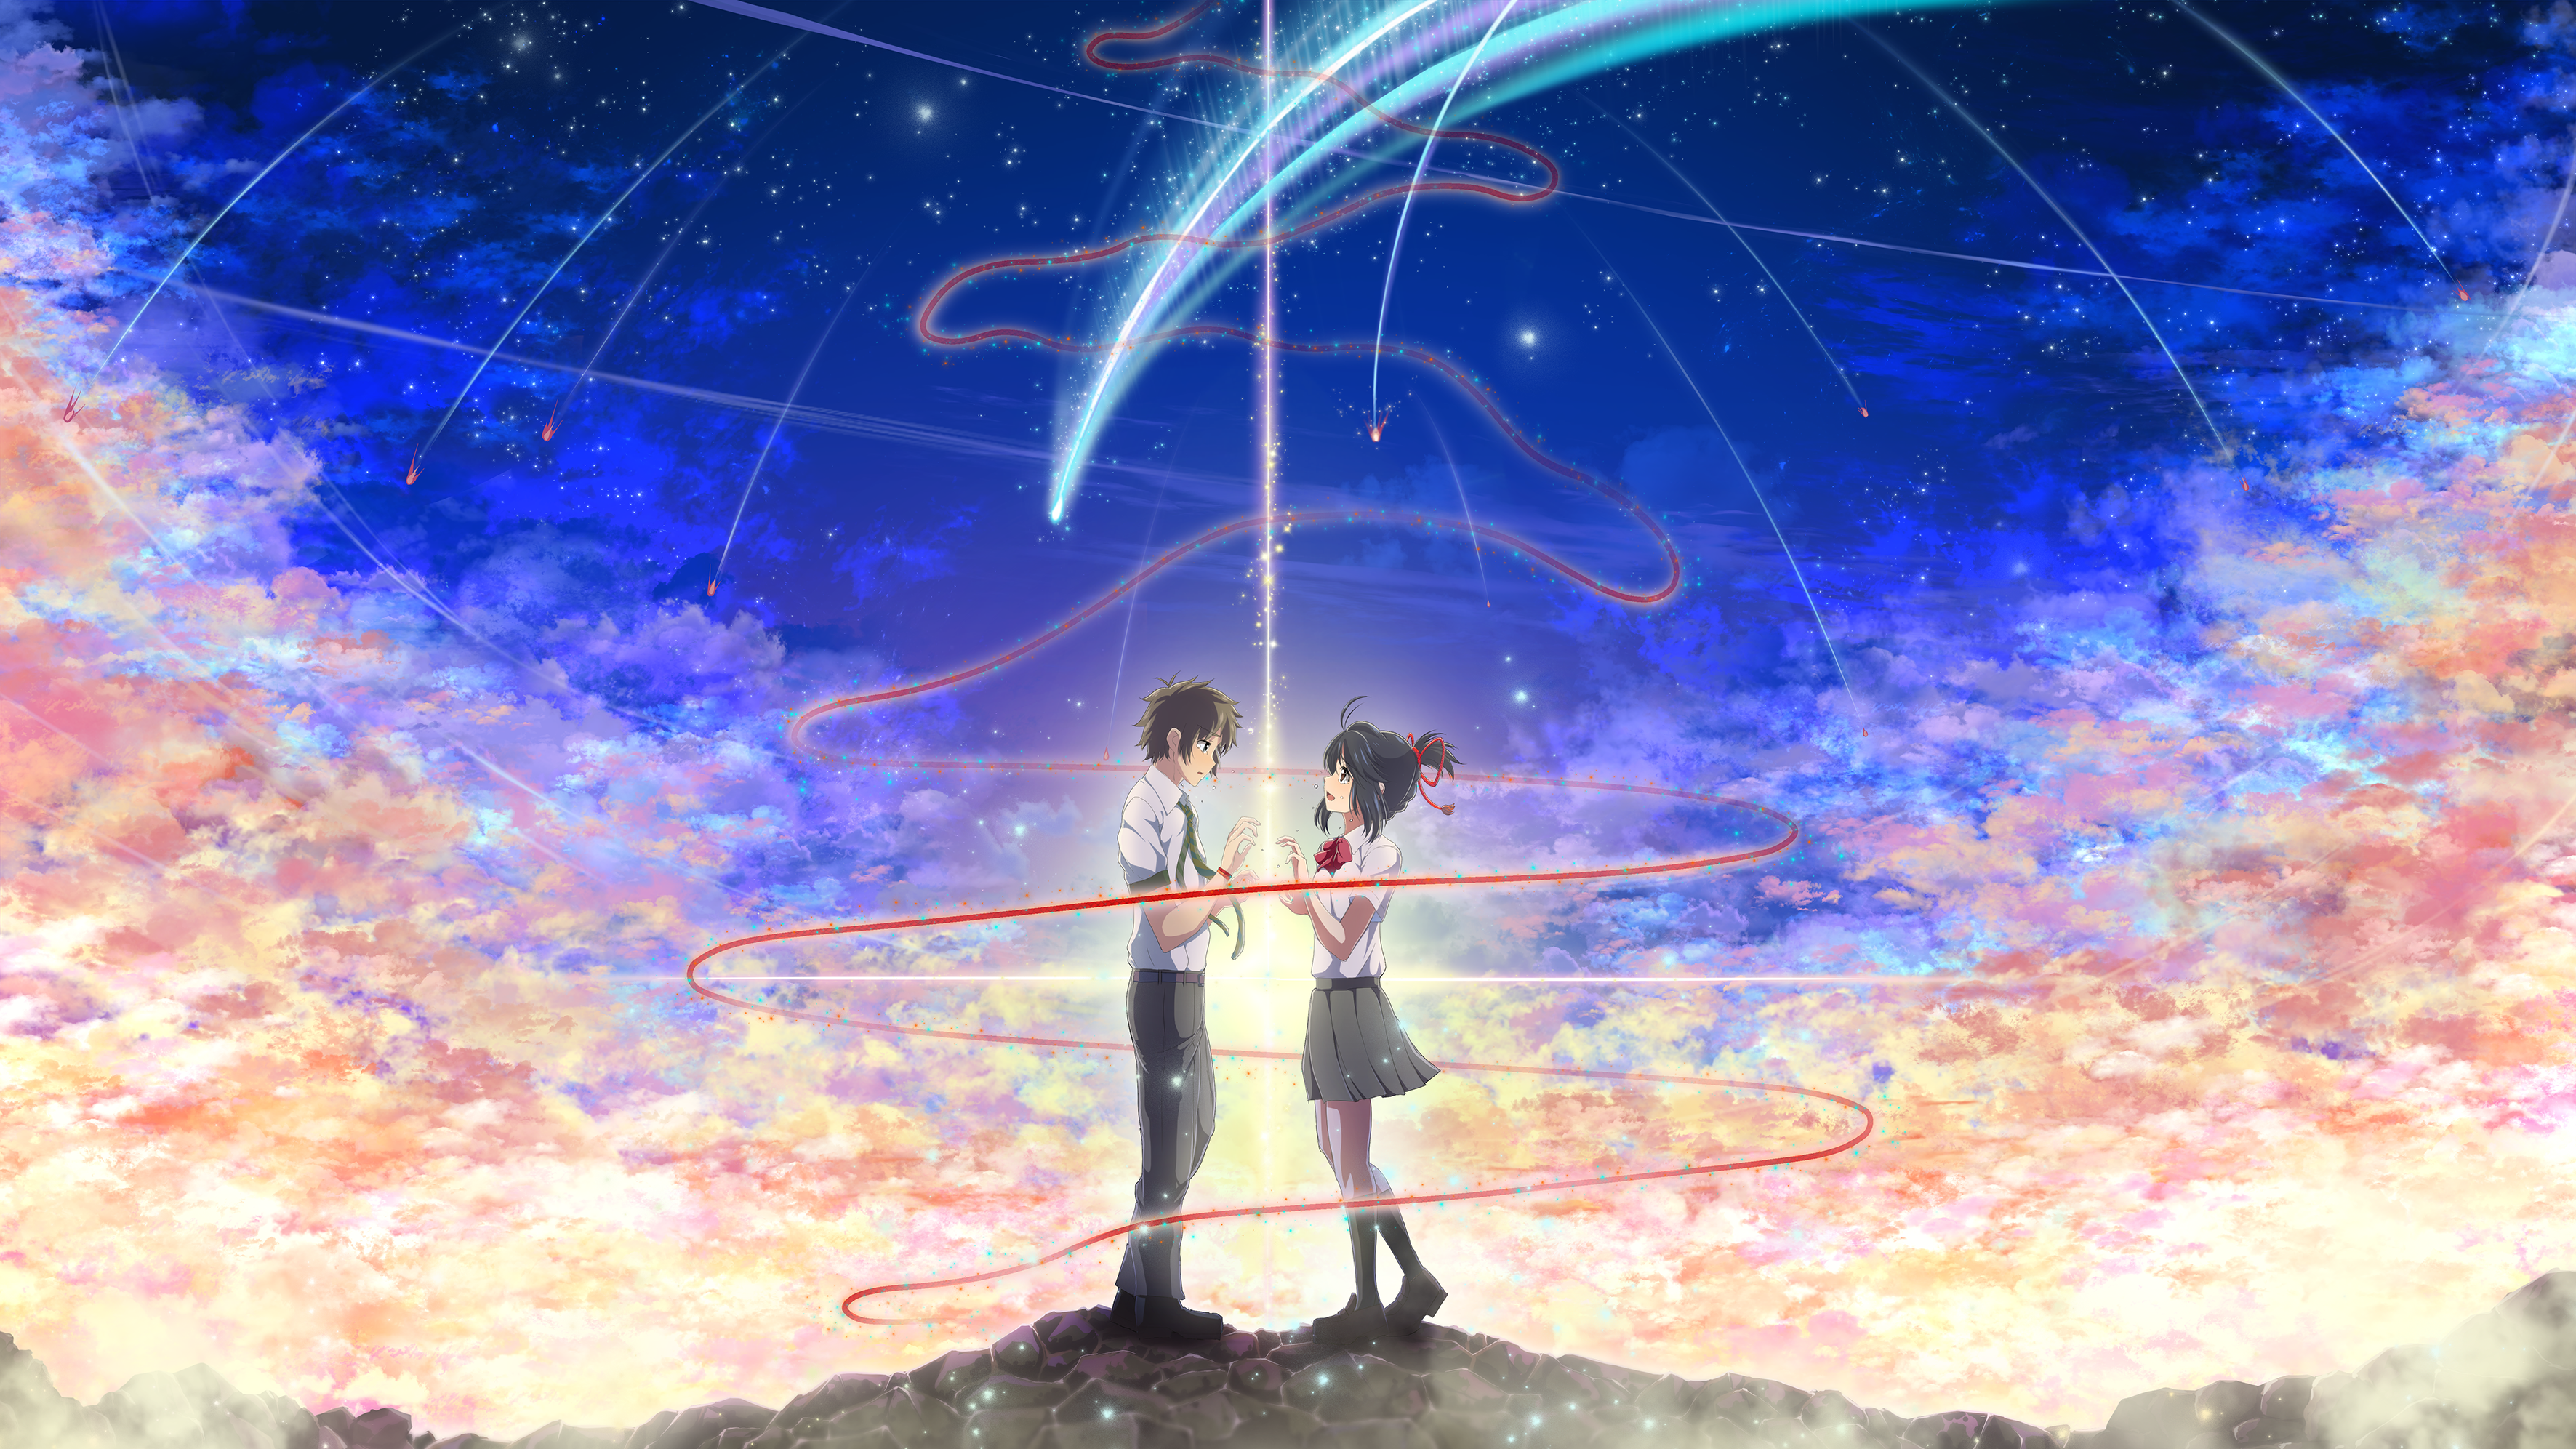 Anime Couples watching shooting stars 4K wallpaper download